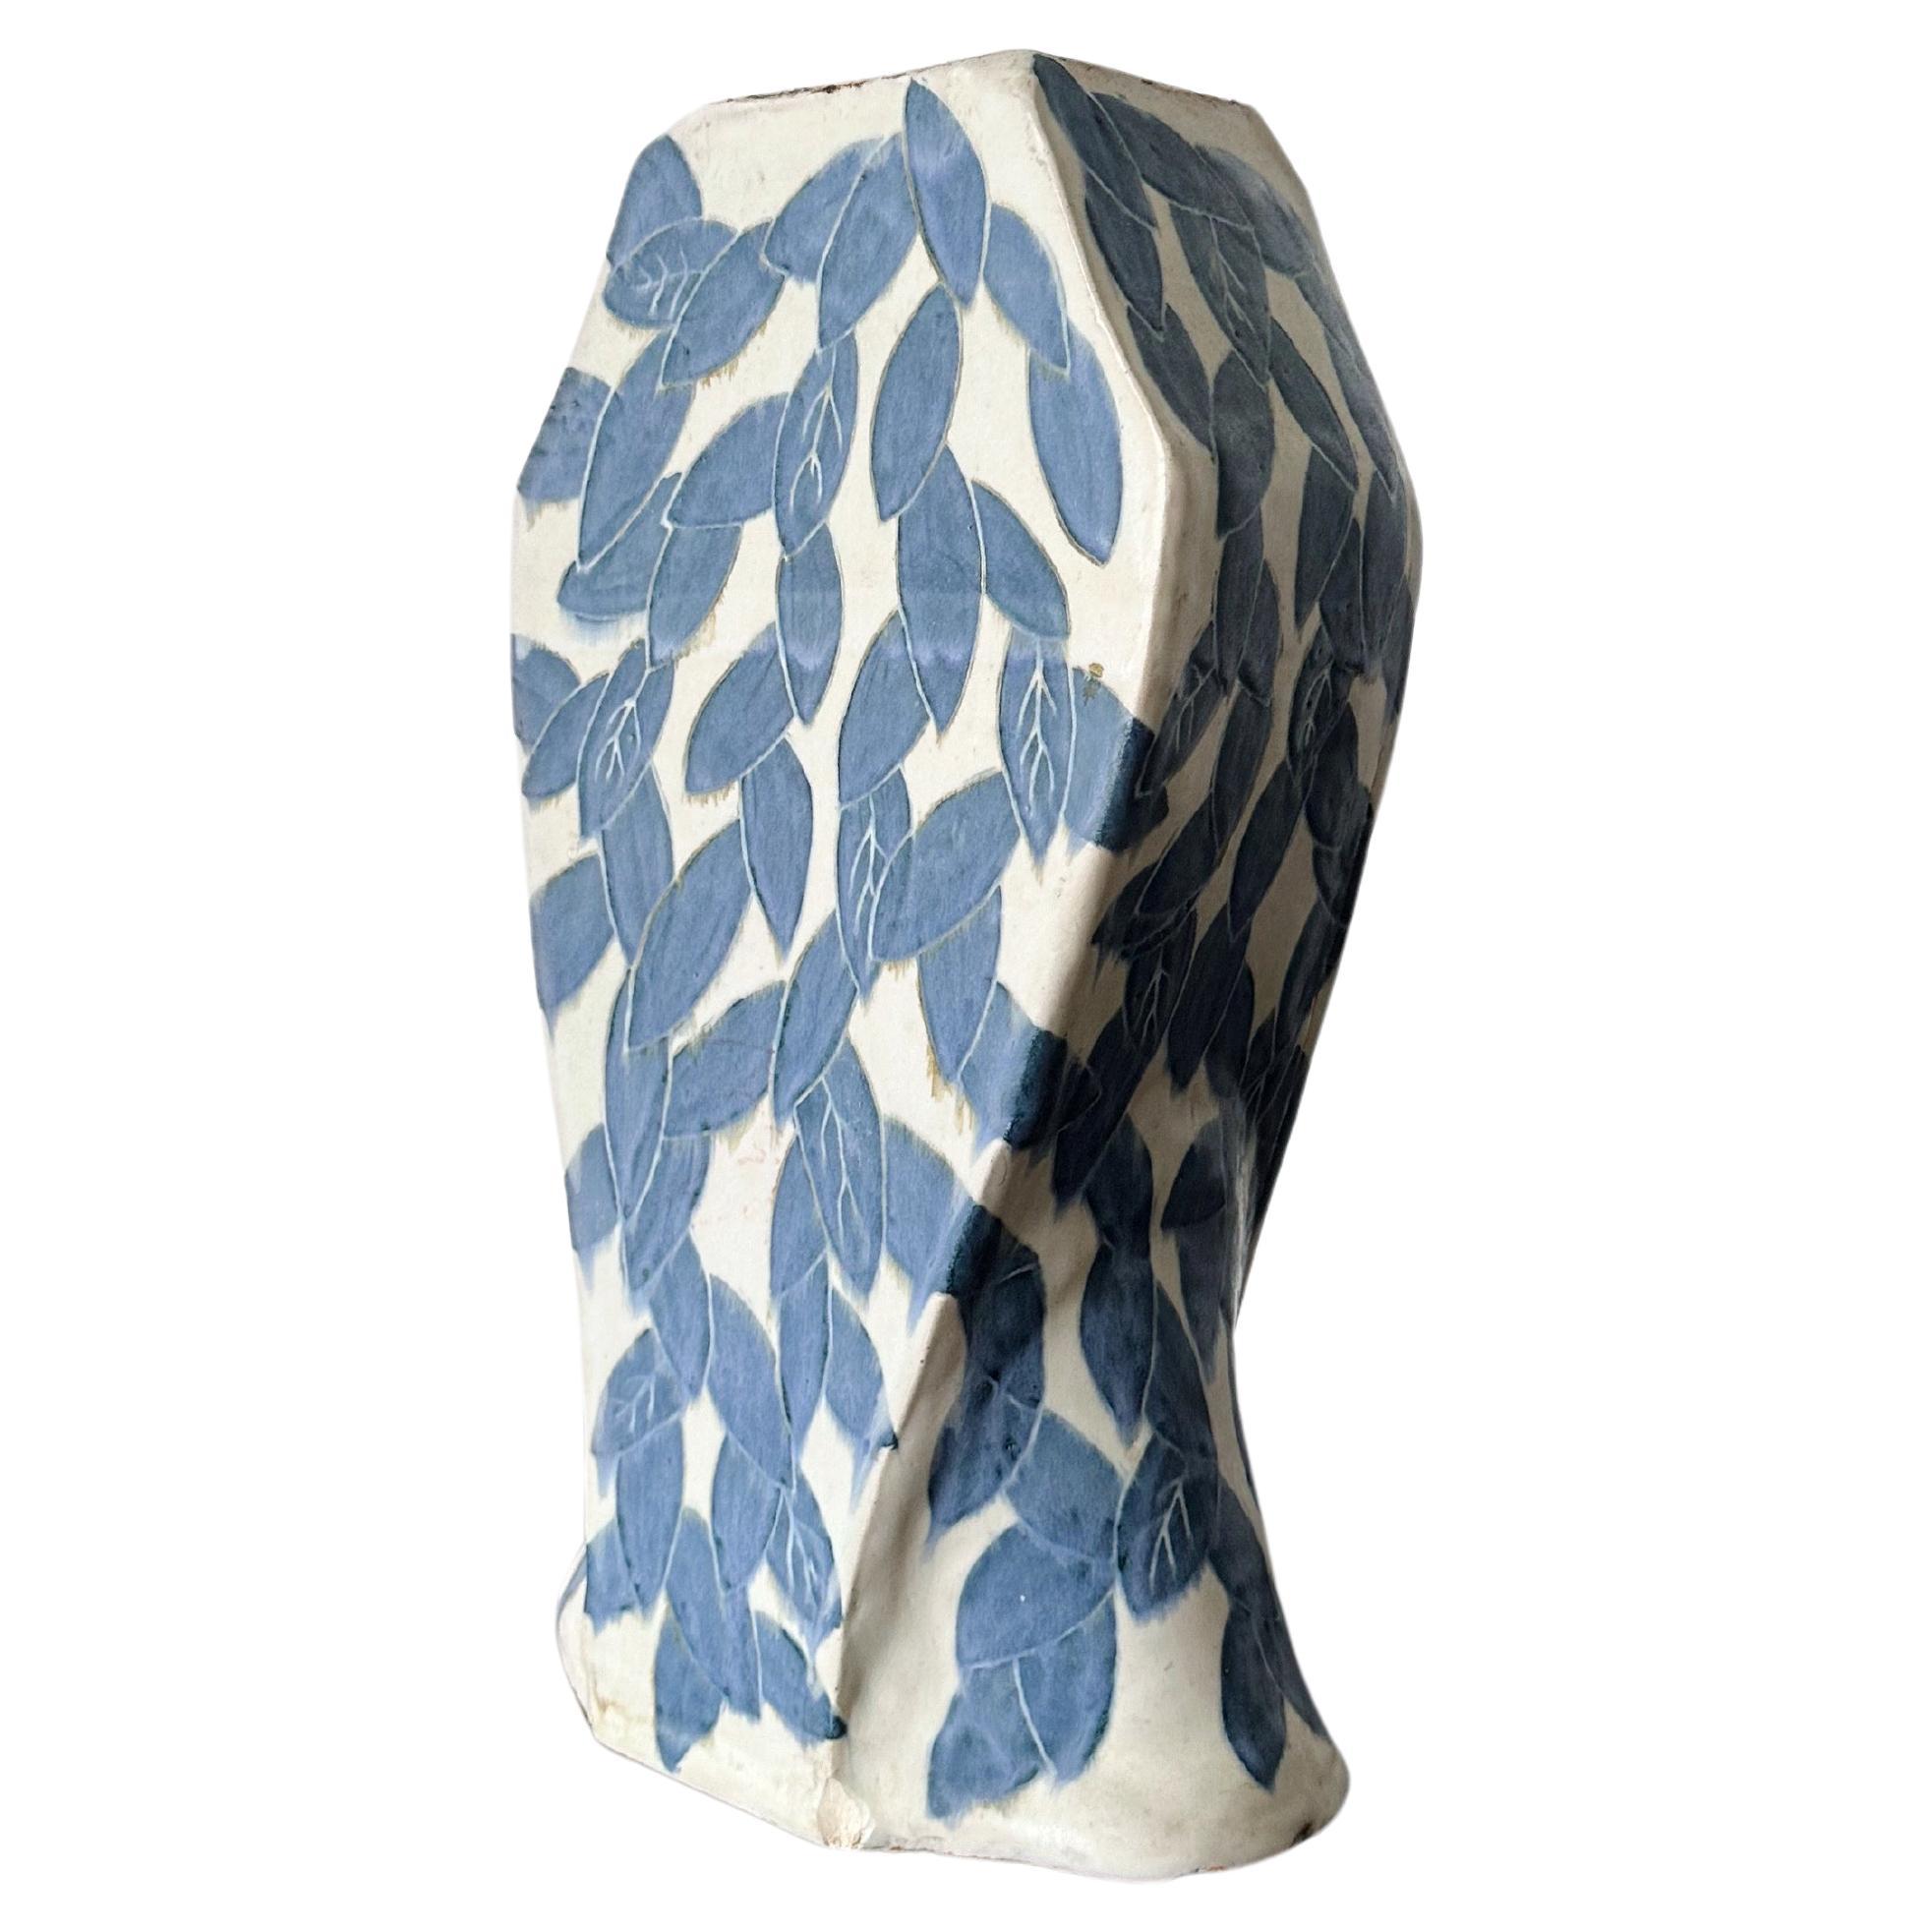 White & Blue Leaf Print Mediterranean Style Big Ceramic Vase